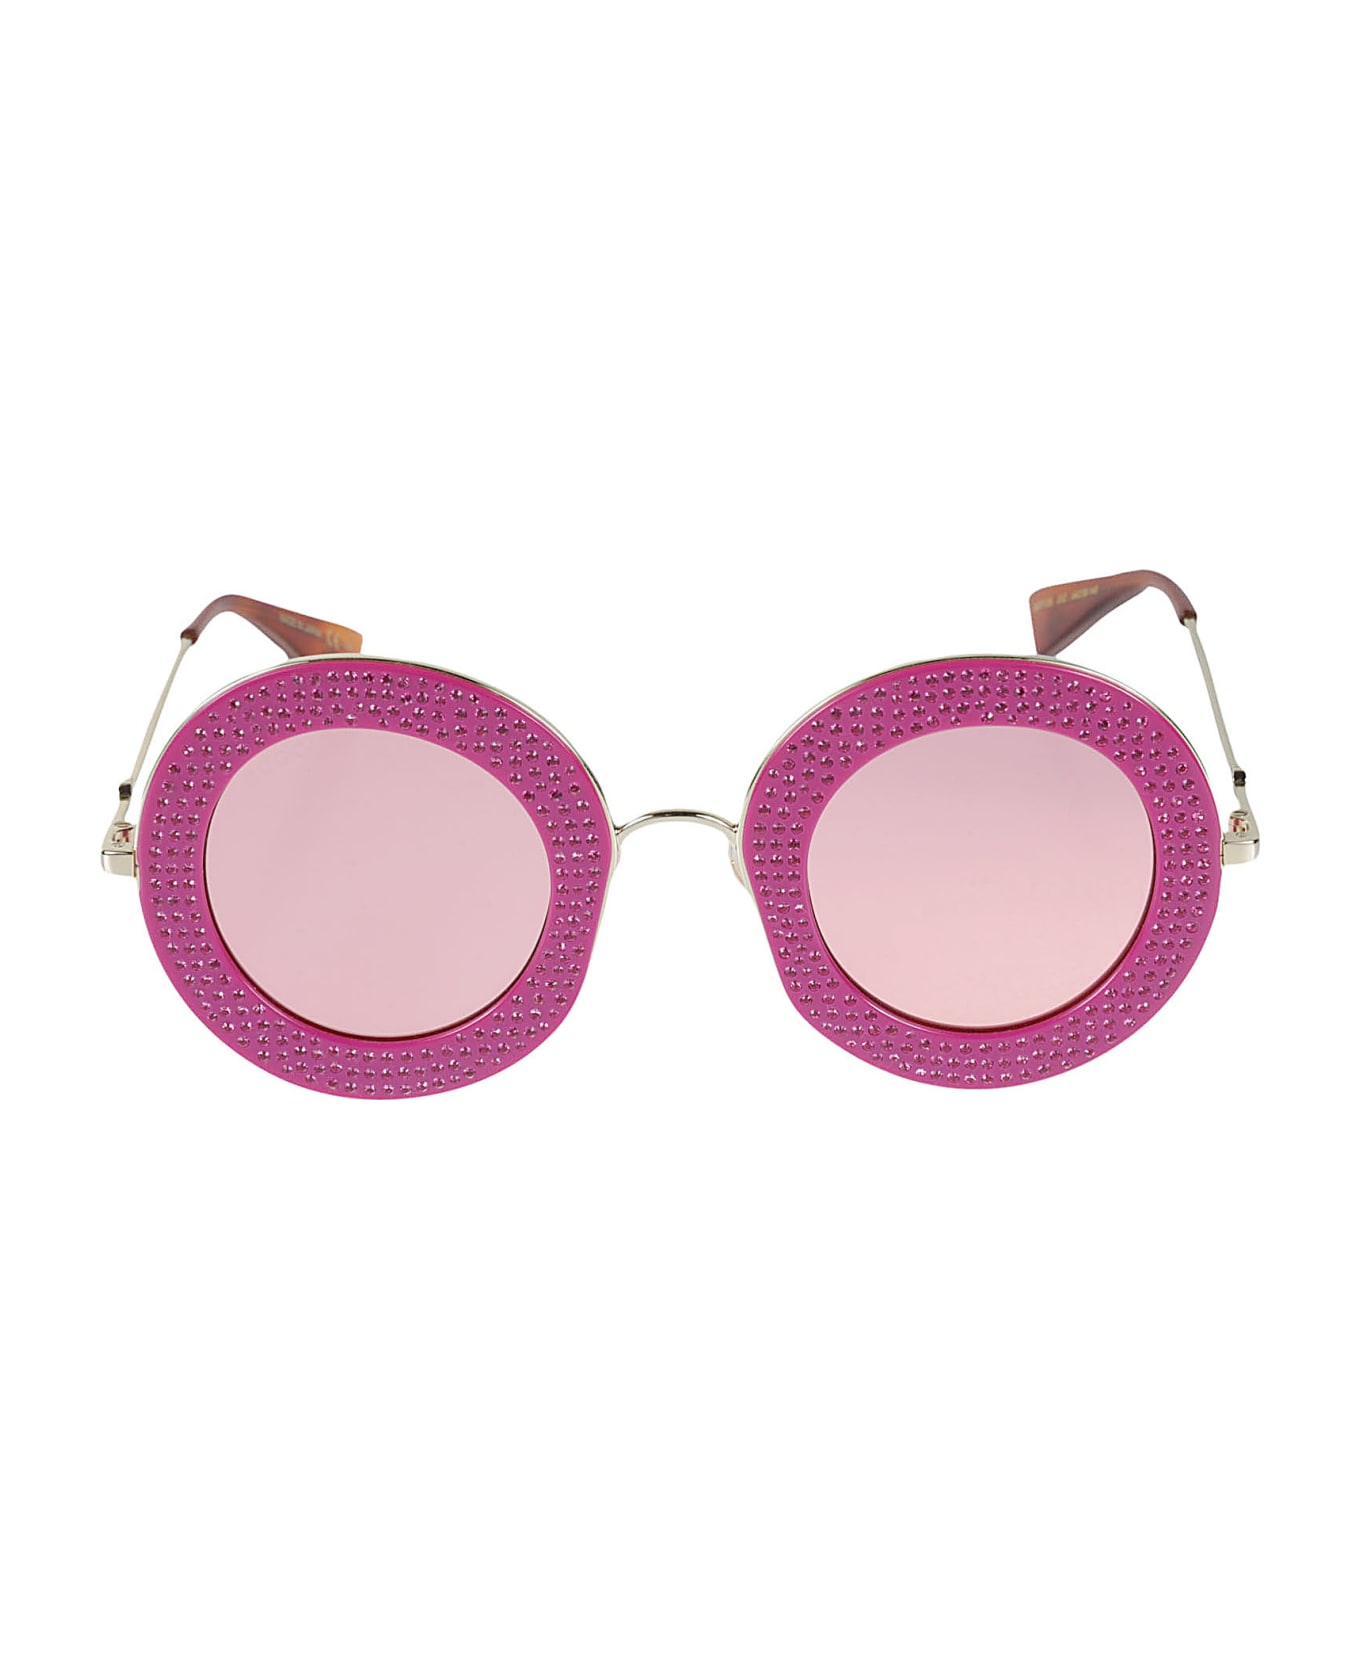 Gucci Eyewear Embellished Round Sunglasses - N/A